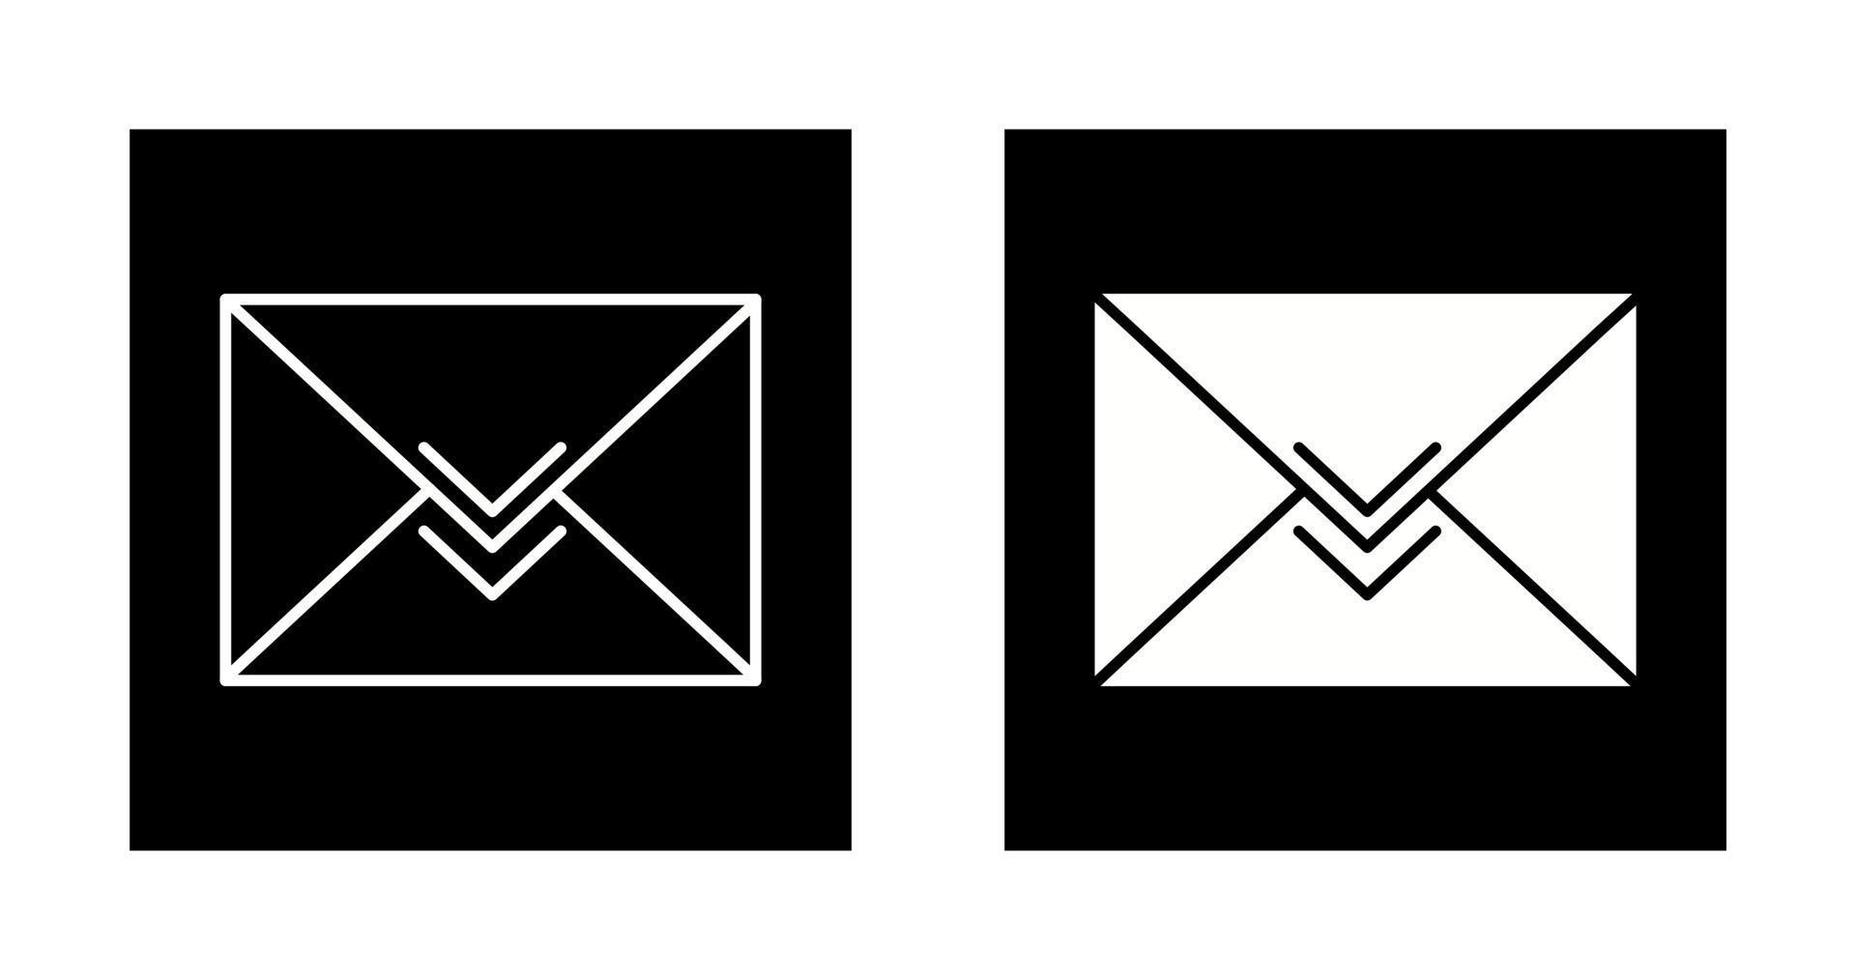 ícone de vetor de envelope